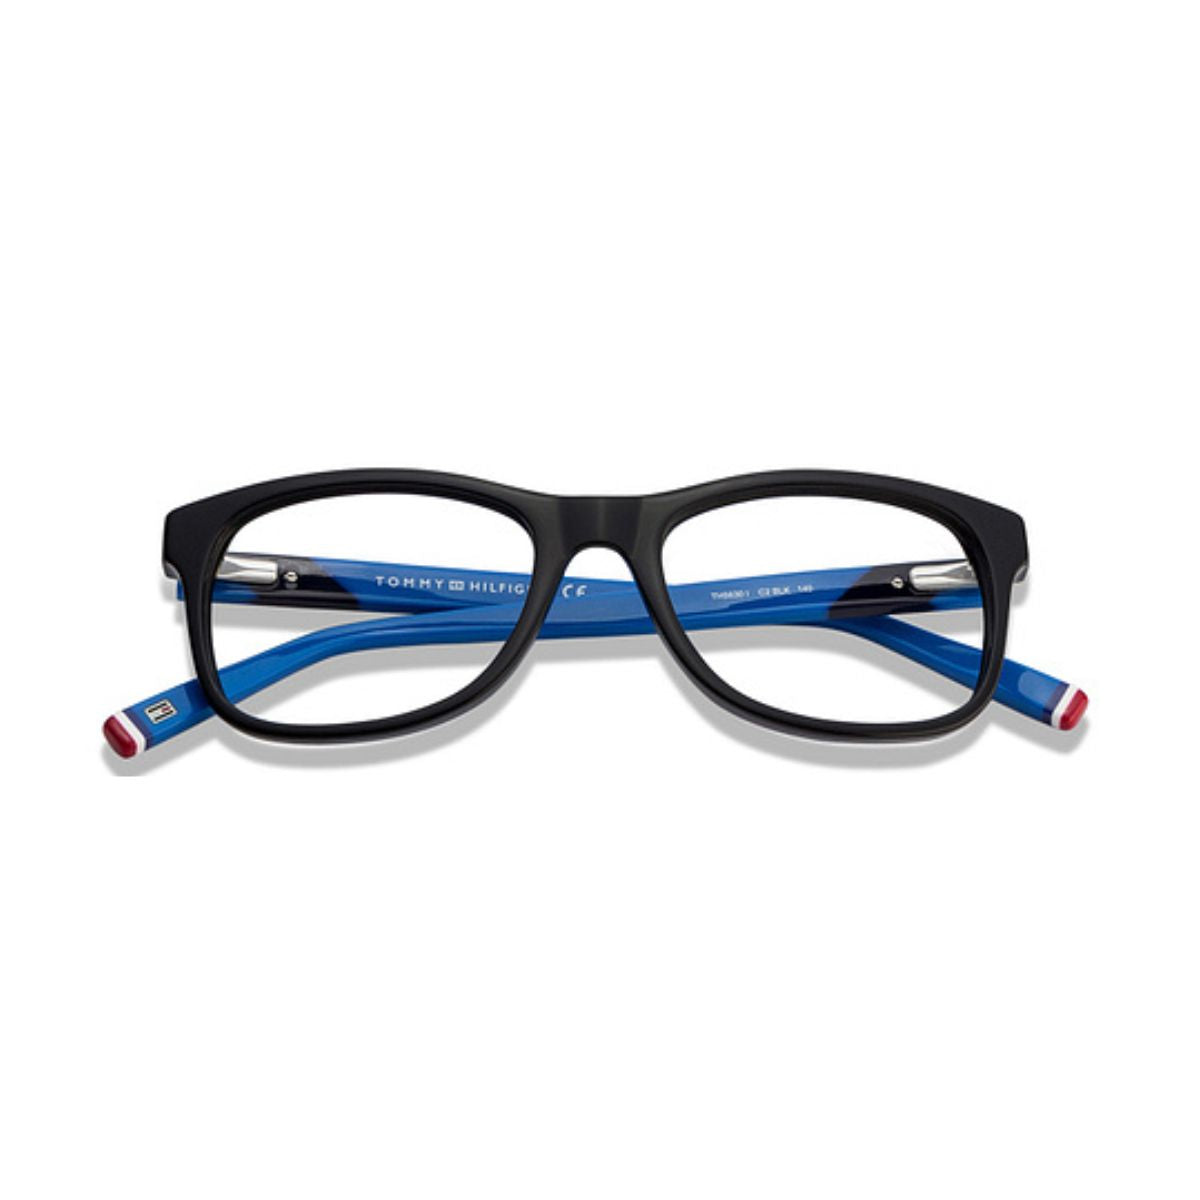 "buy Tommy Hilfiger 5630 C2 glasses frames for men's and women's at optorium"